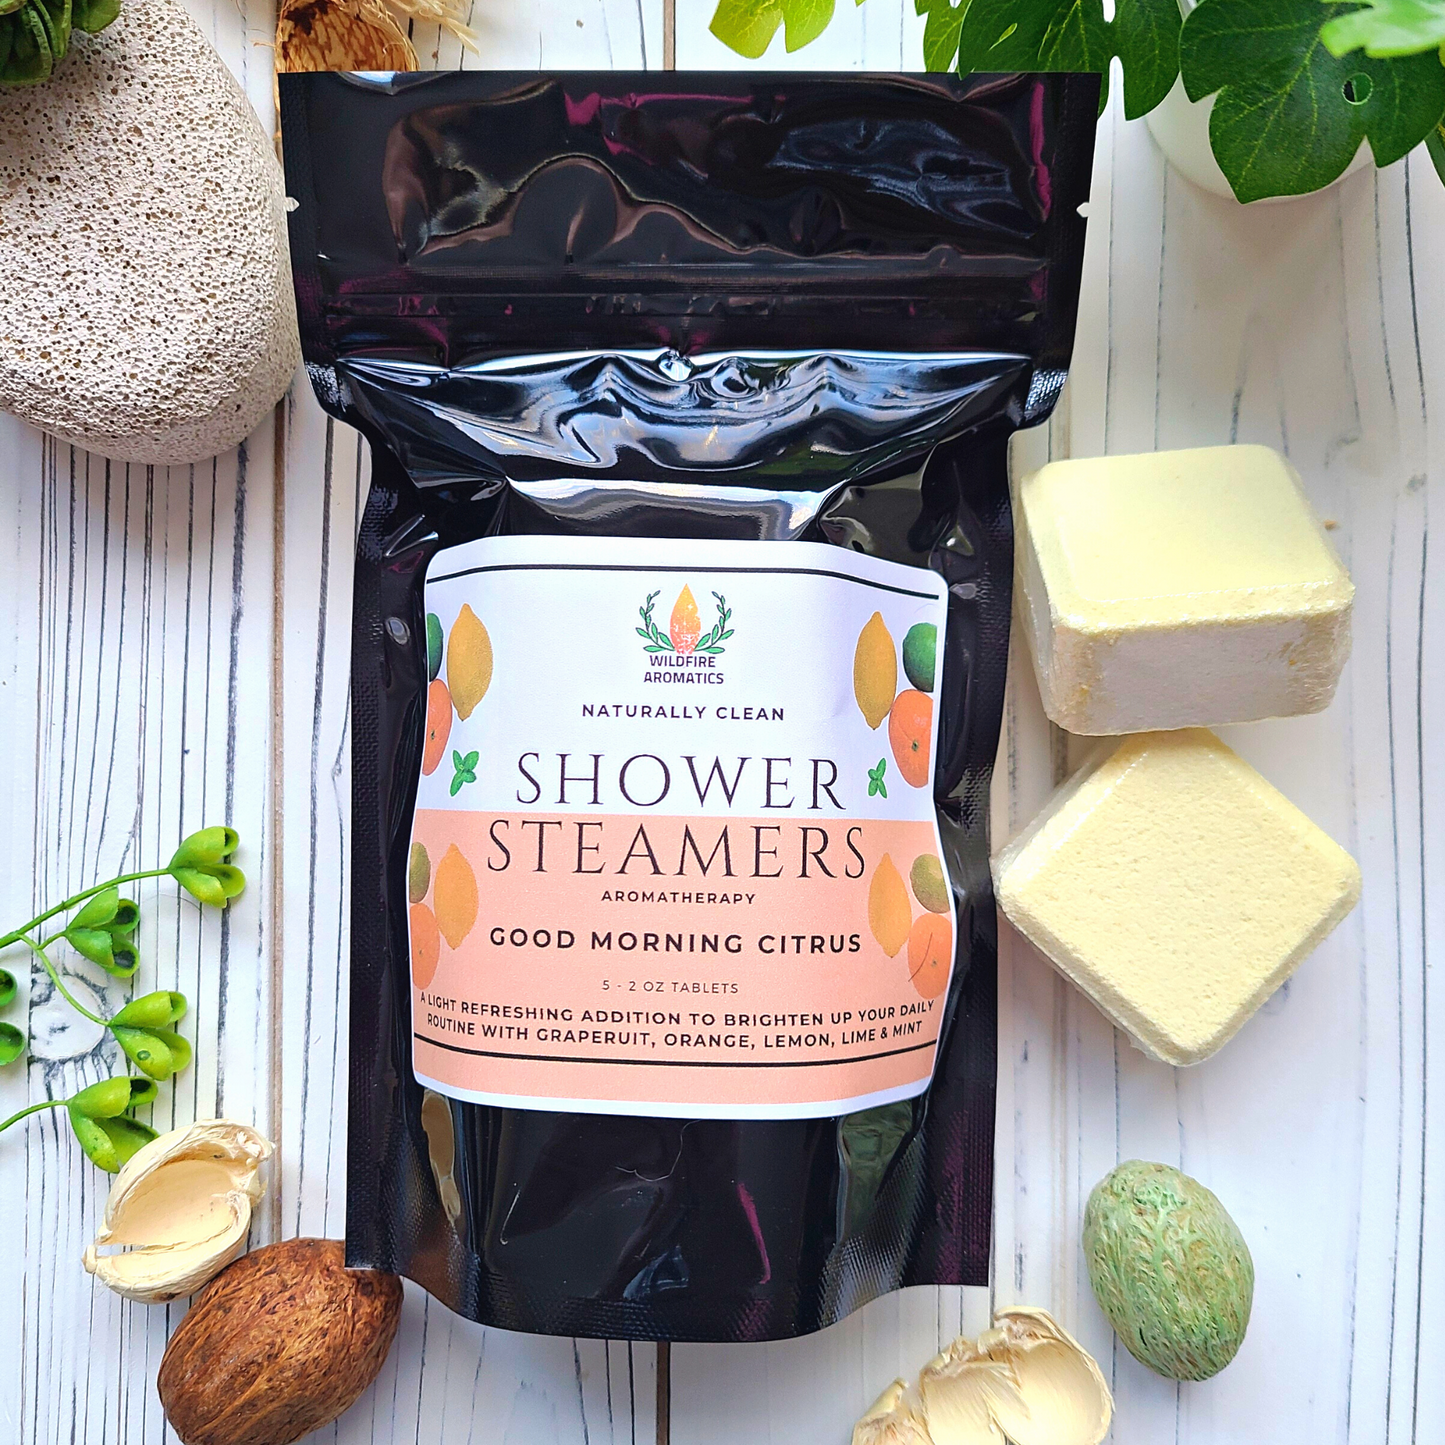 Shower Steamer aromatherapy tablet, Good Morning Citrus Grapefruit Spearmint blend